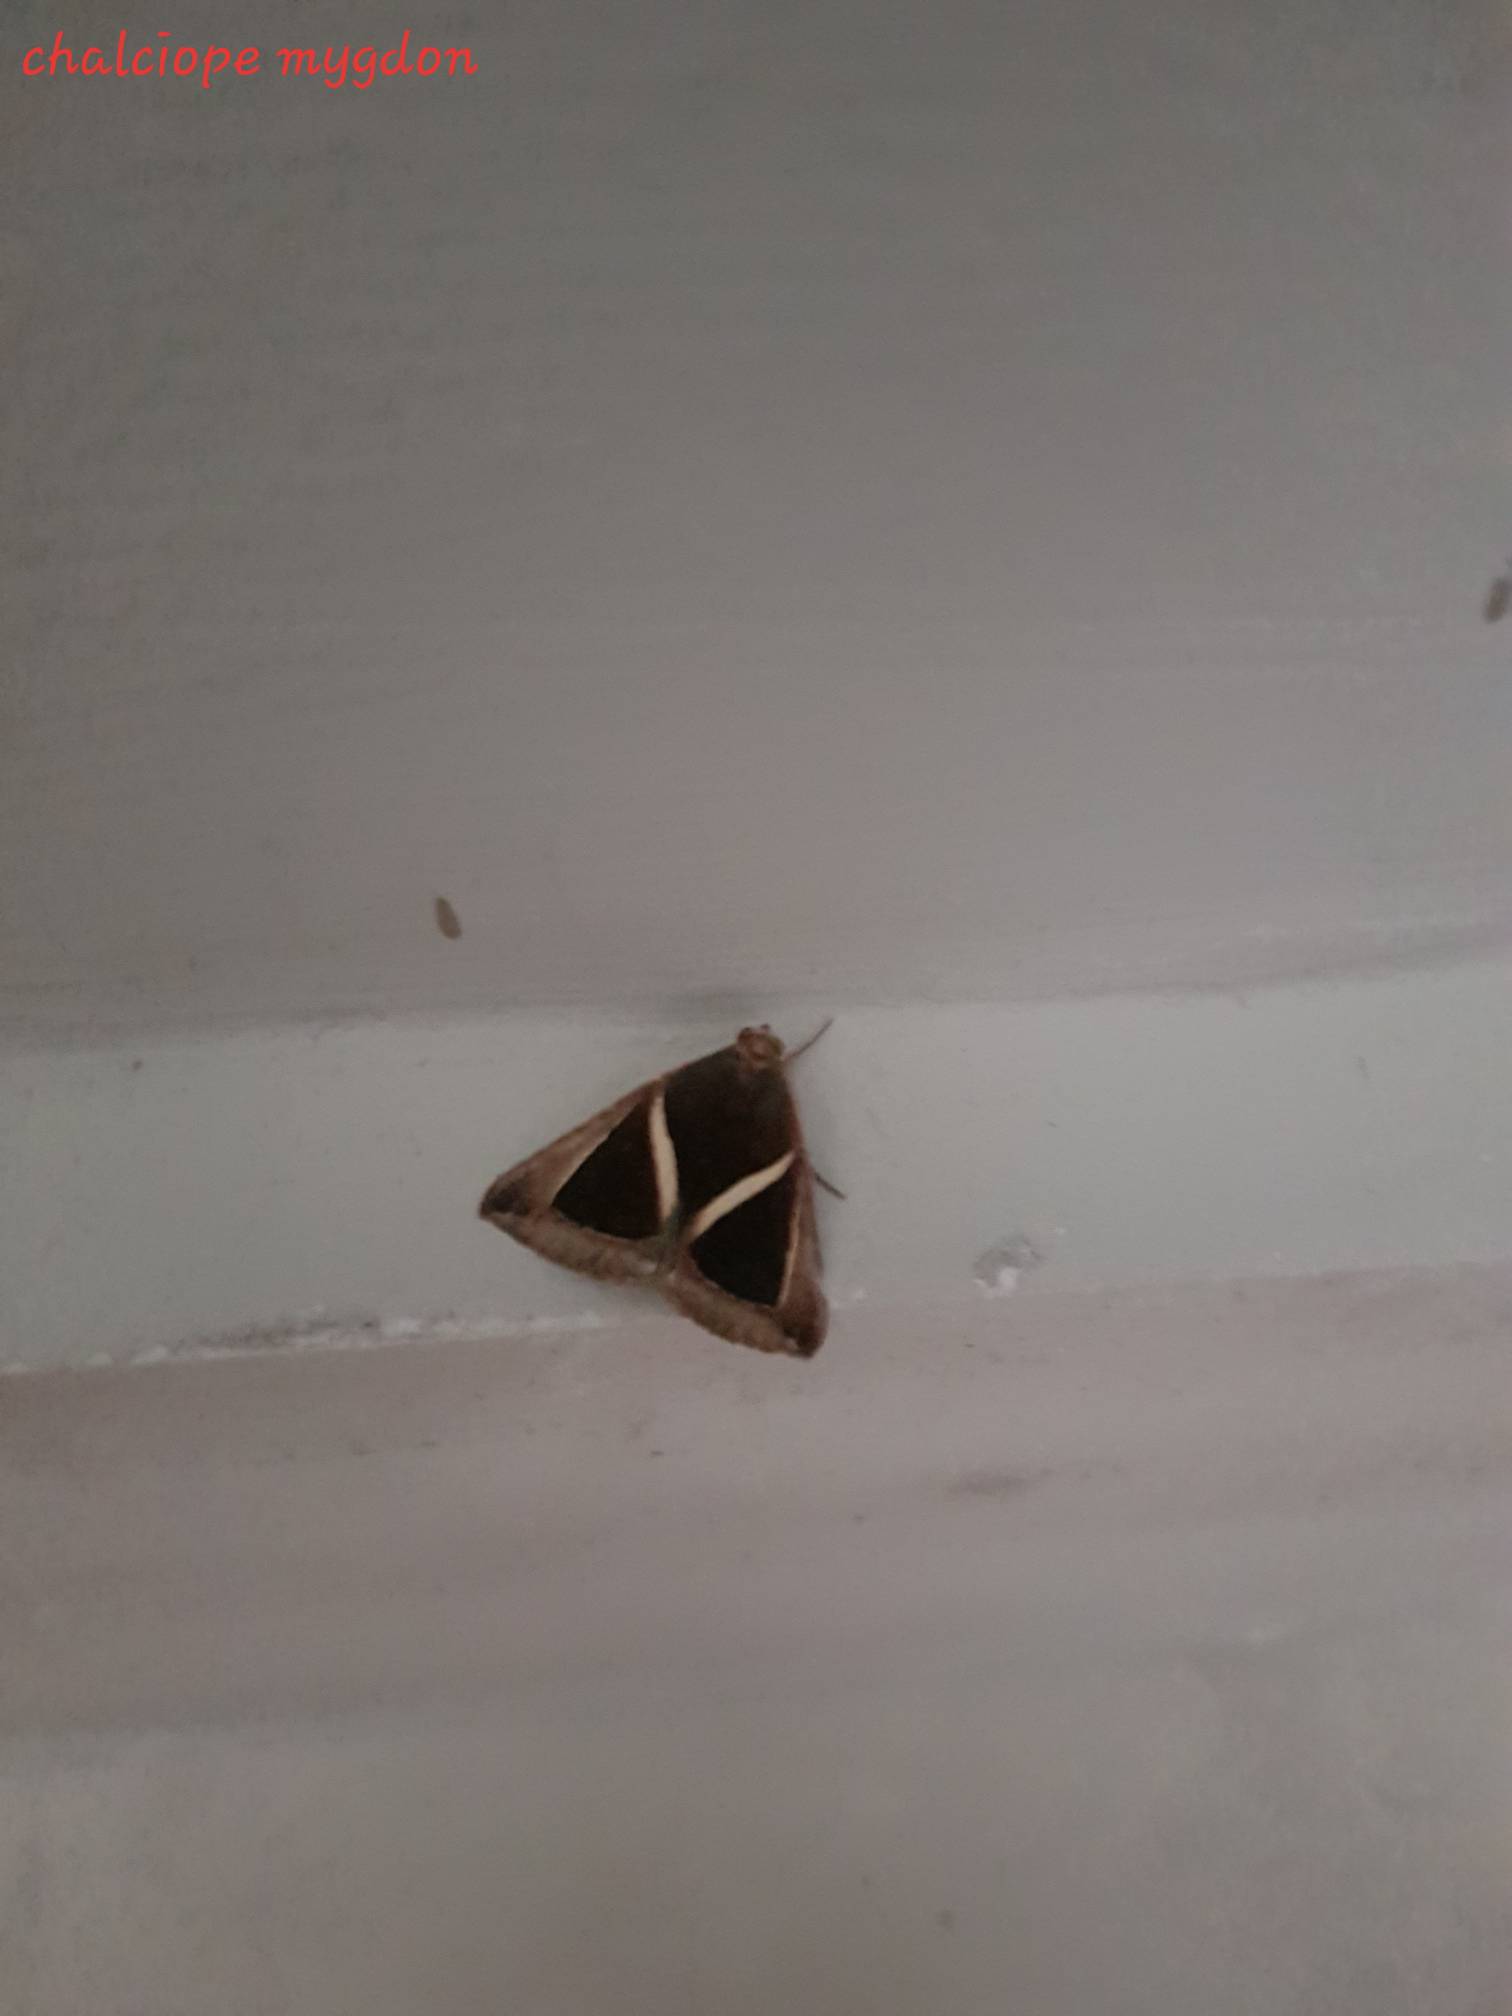 Triangular striped moth